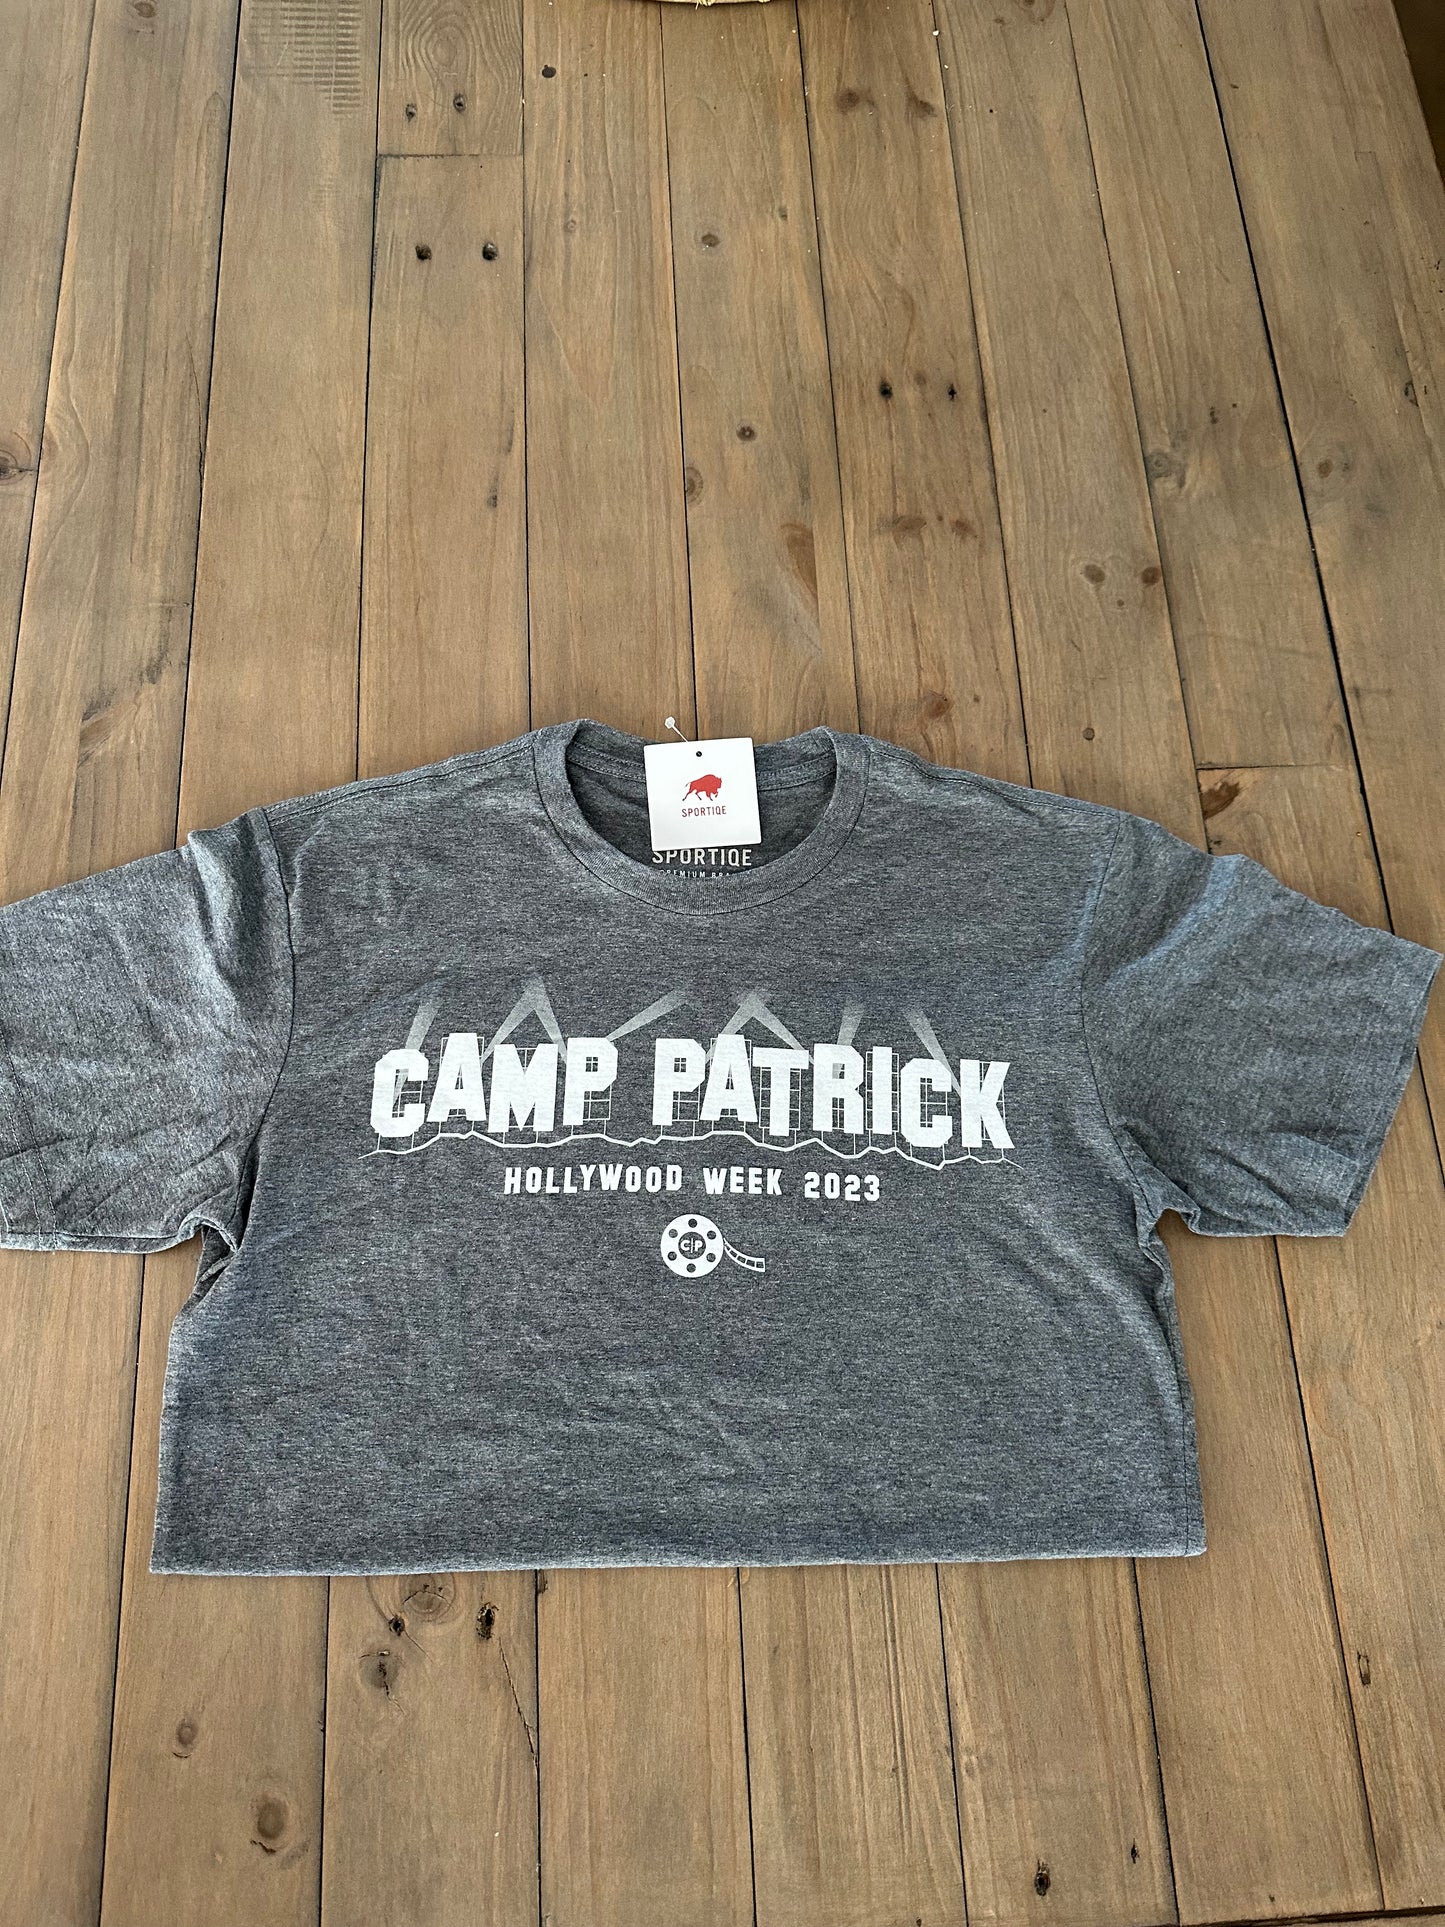 Camp Patrick "Hollywood" T-Shirt - Adult